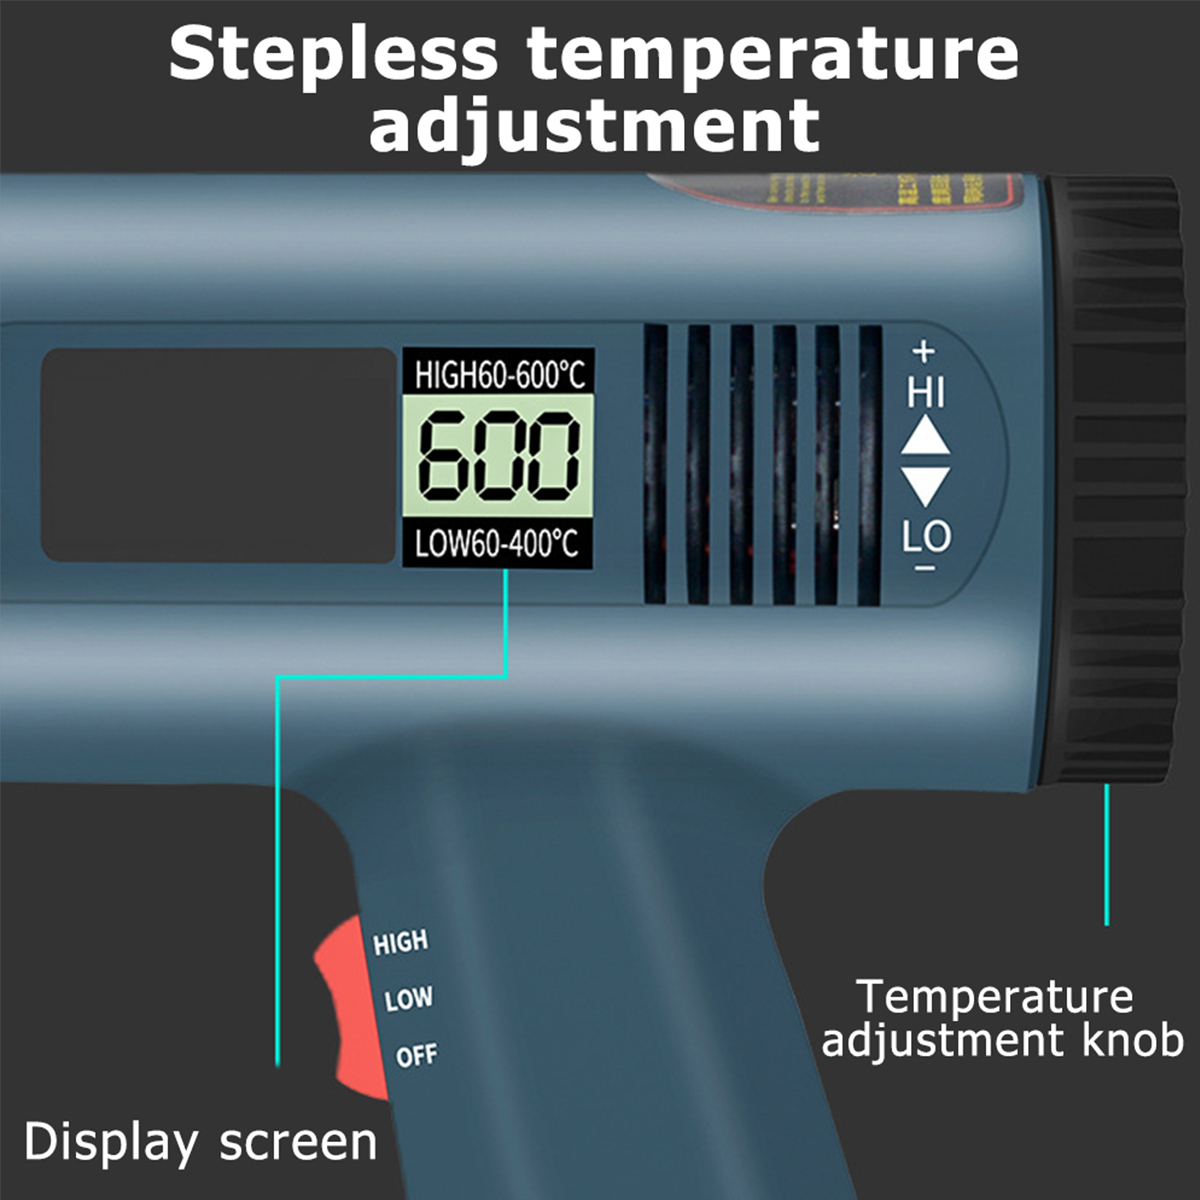 Digital Display Electric Hot Air Power Tool Temperature-controlled Building Heat Machine